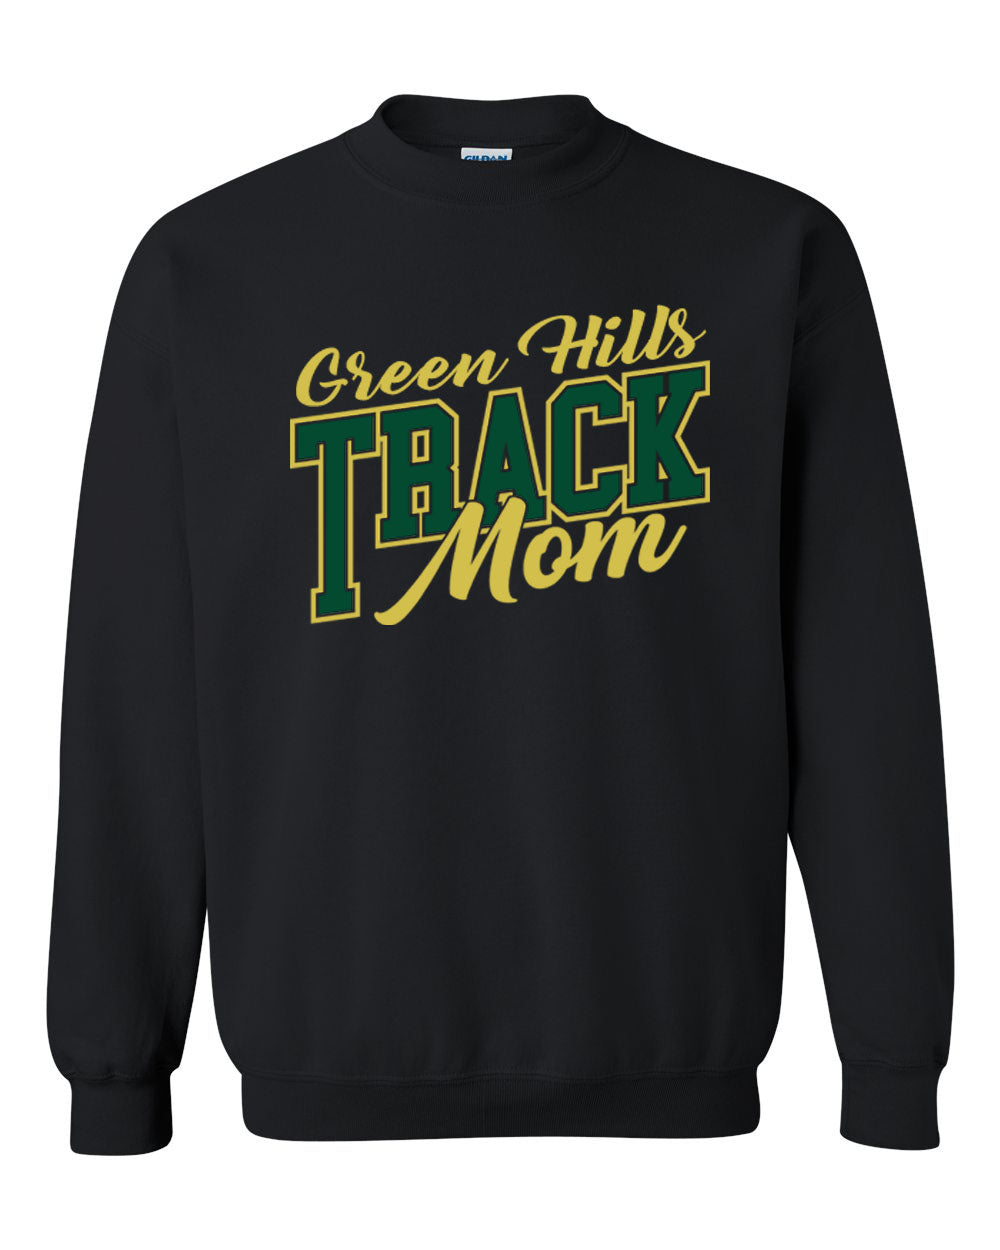 Green Hills Track Design 5 non hooded sweatshirt